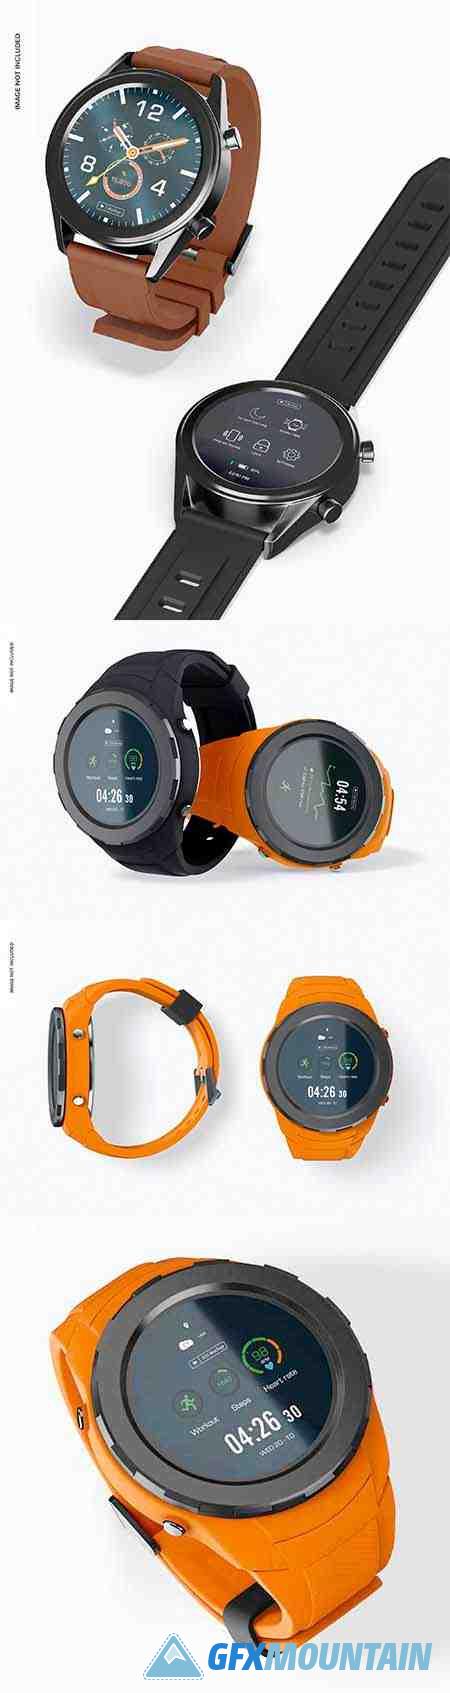 Smartwatch mockup